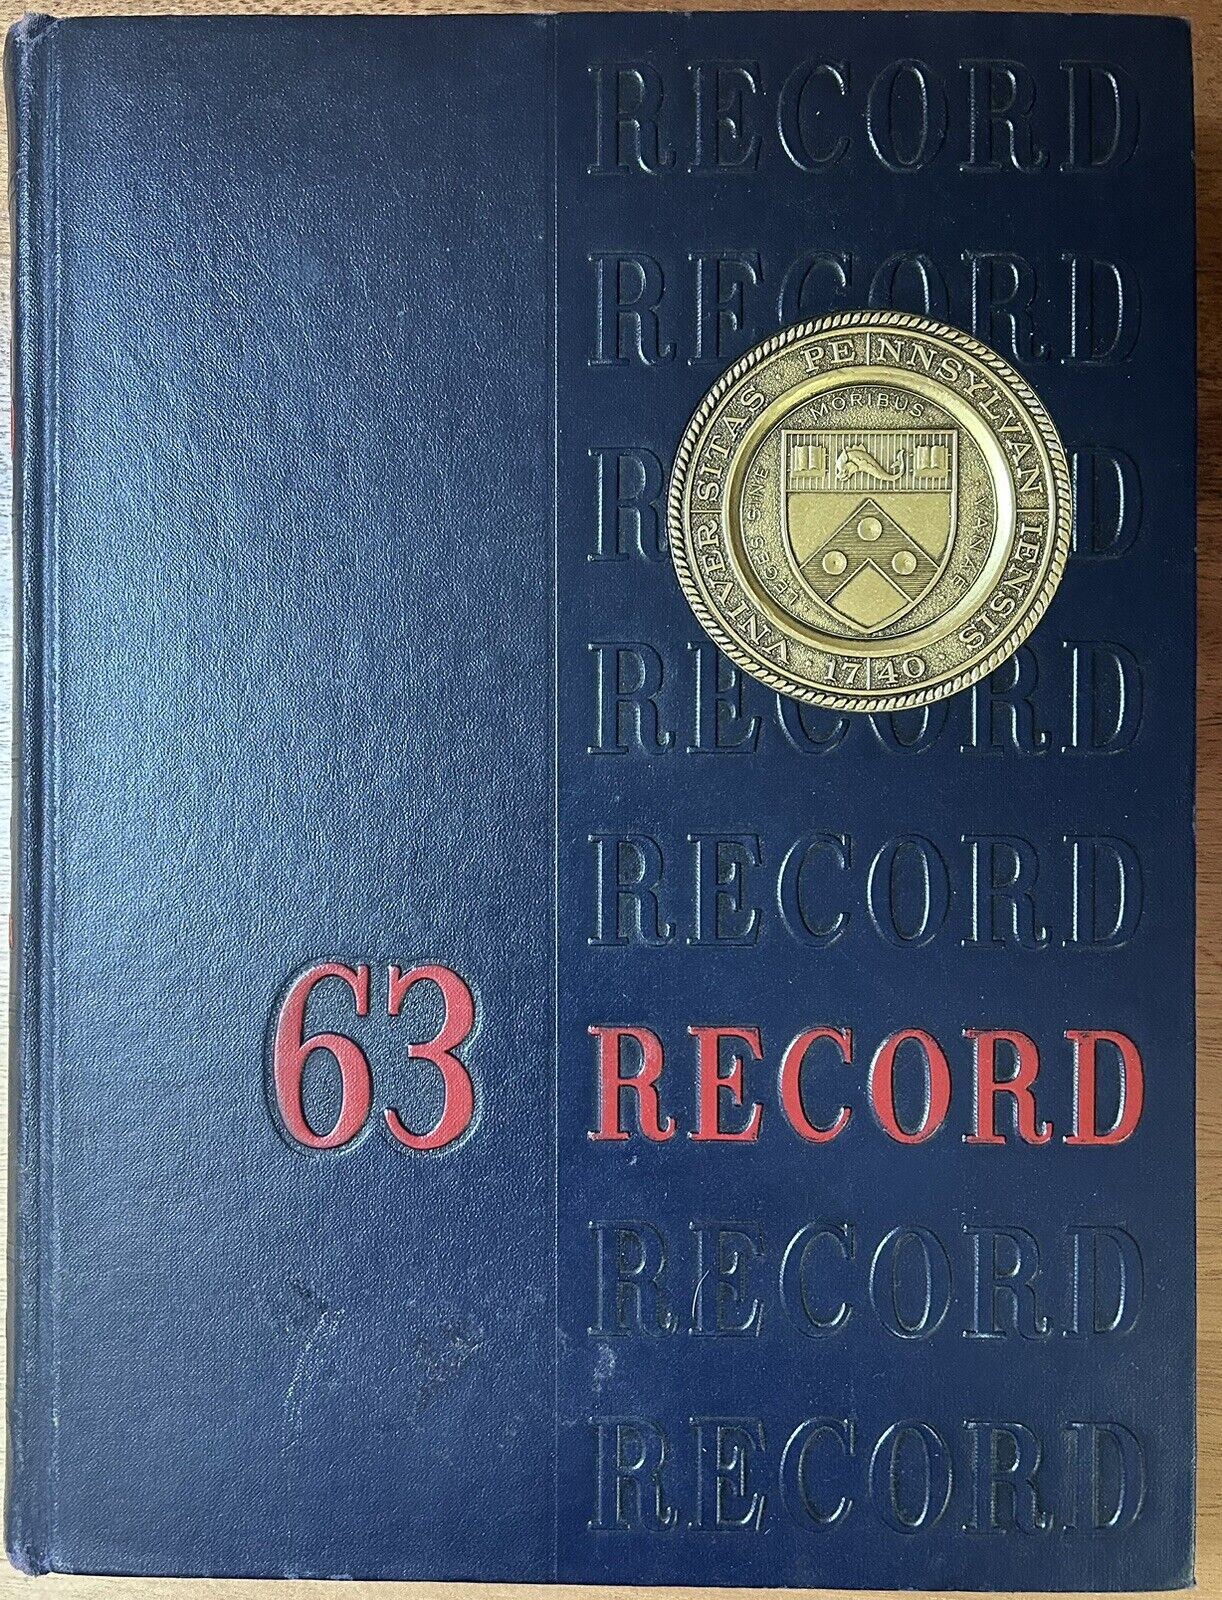 University Of Pennsylvania Yearbook 1963